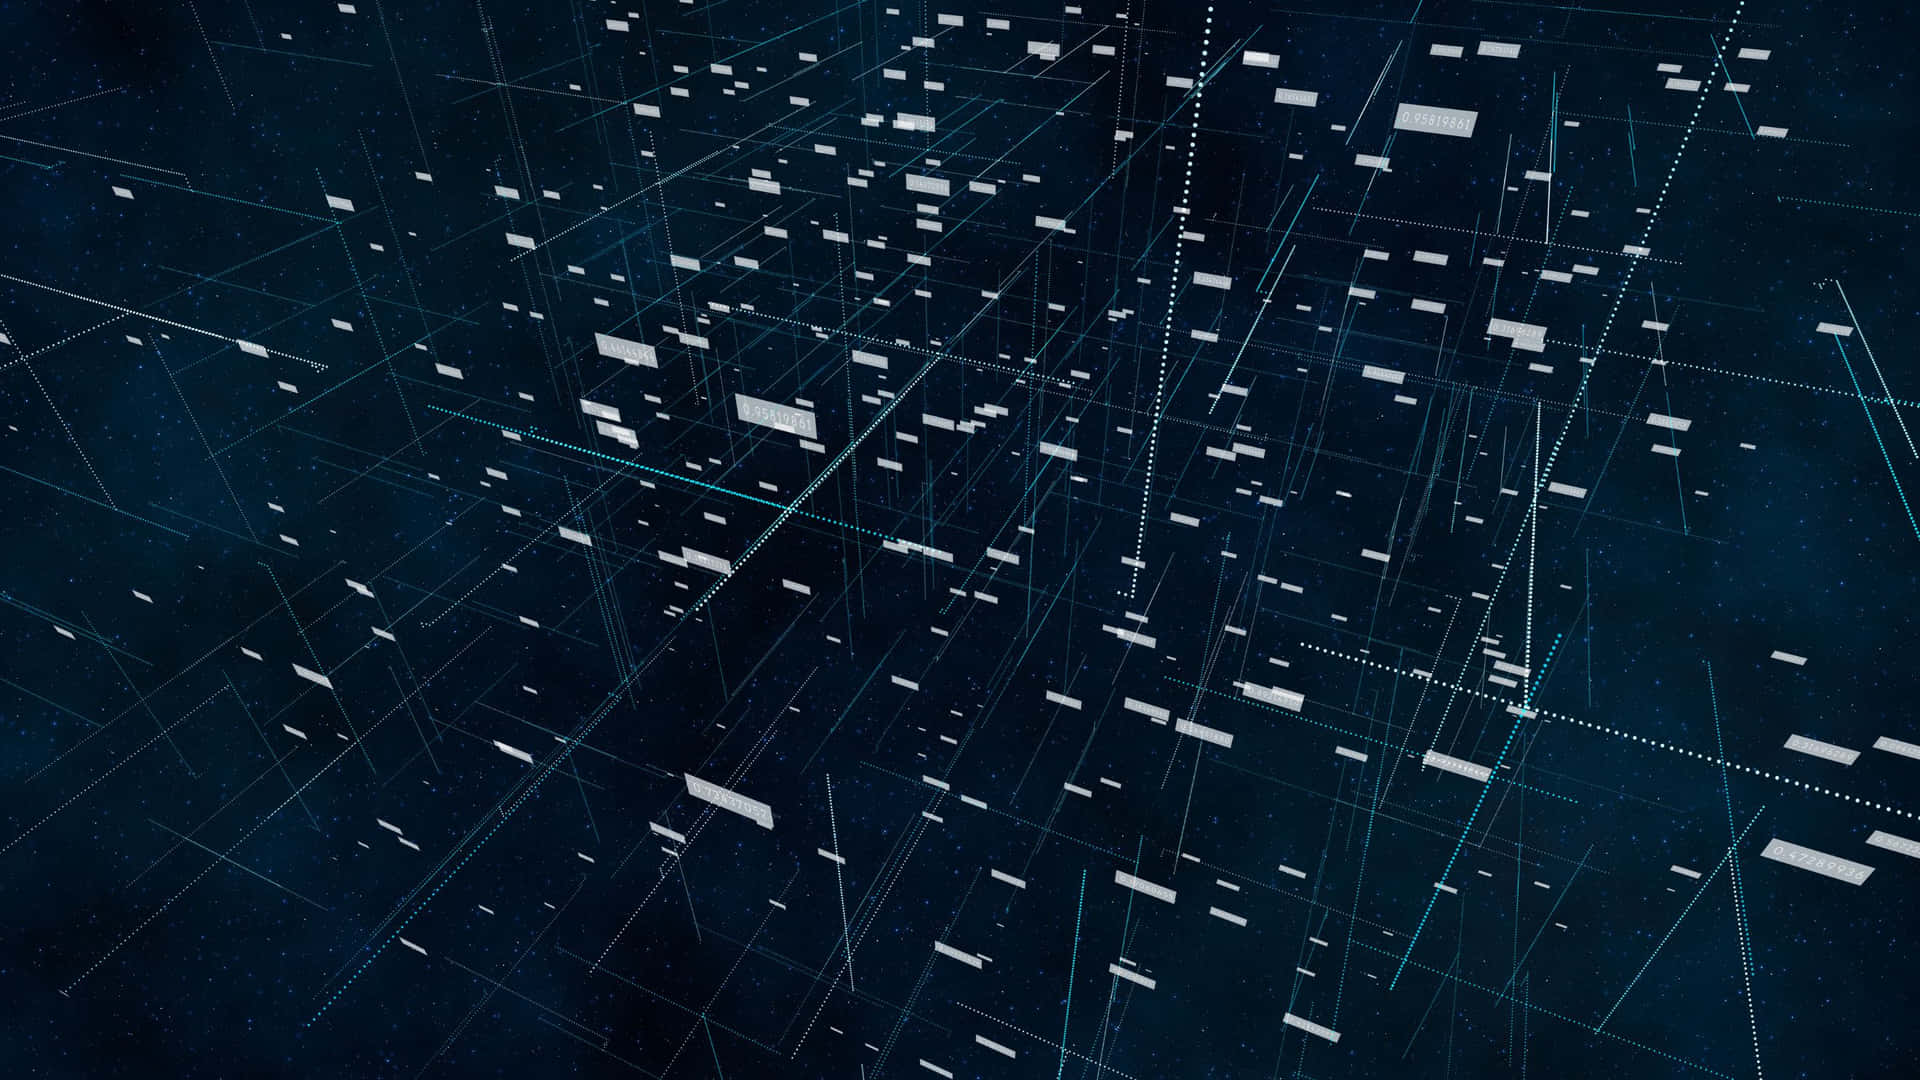 Abstract Data Network Visualization Wallpaper